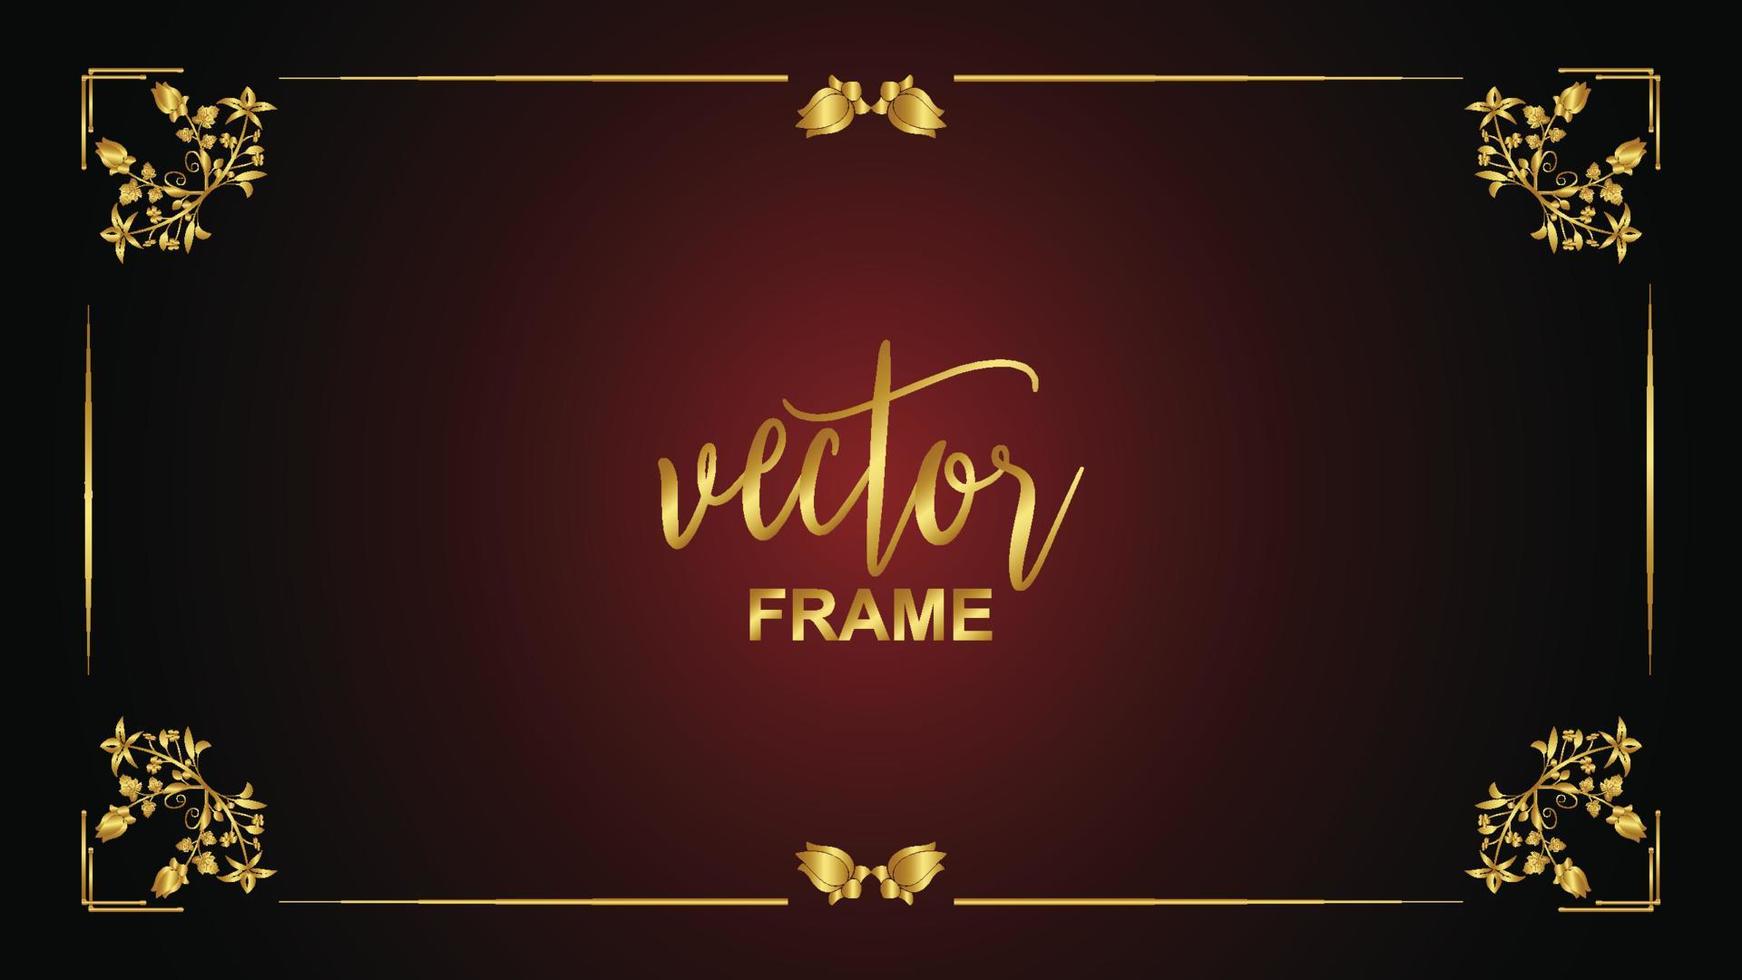 New Golden vintage flourish ornament vector frame